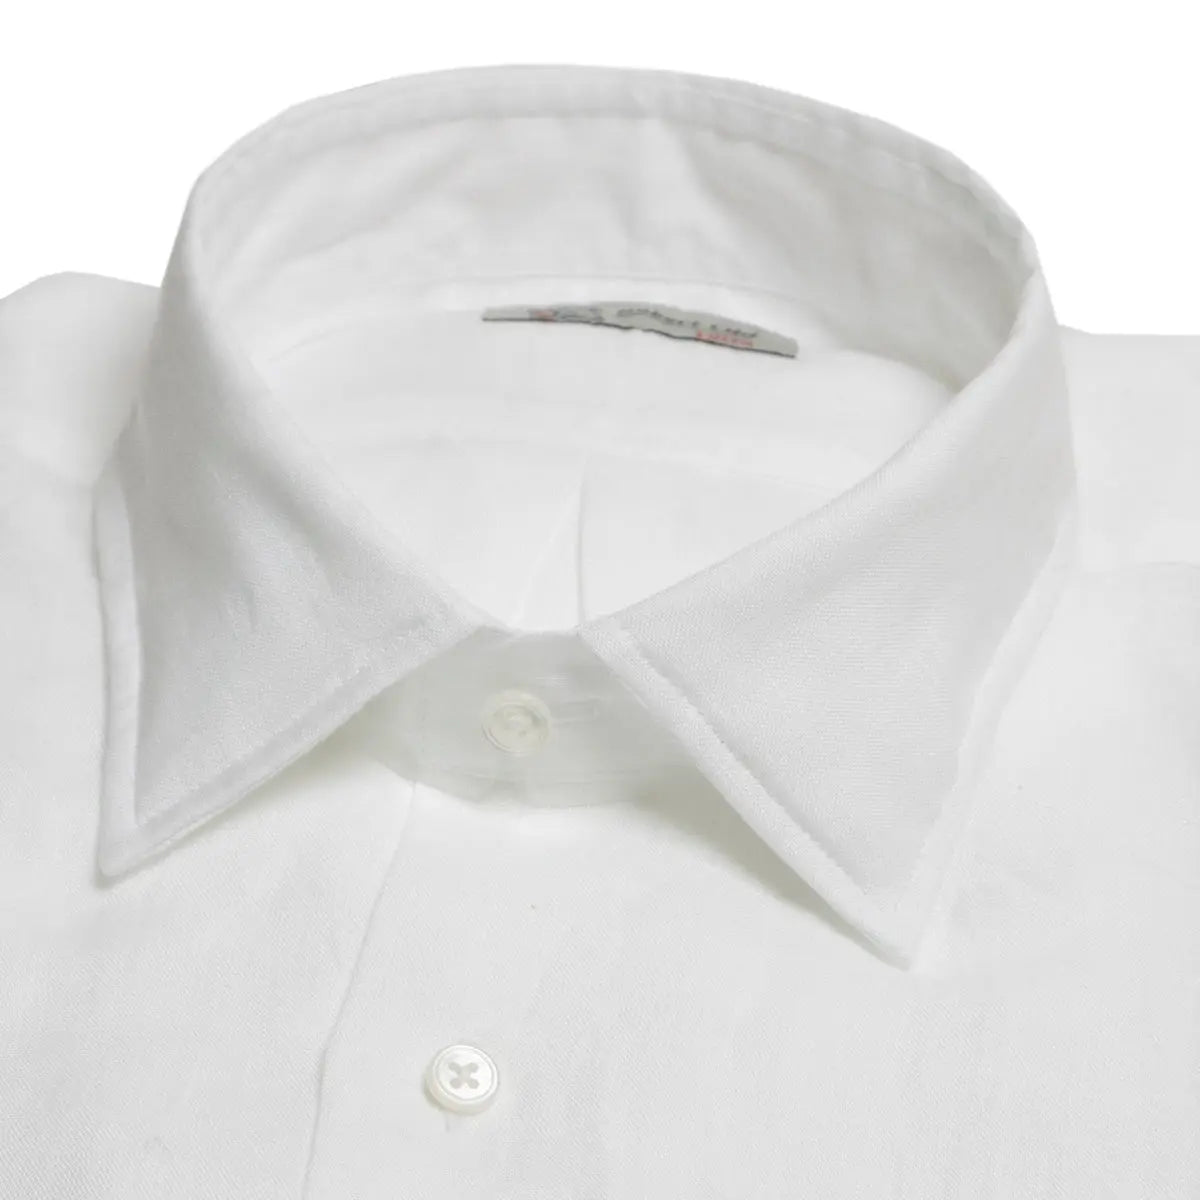 White Linen Long Sleeve Shirt  Robert Old   